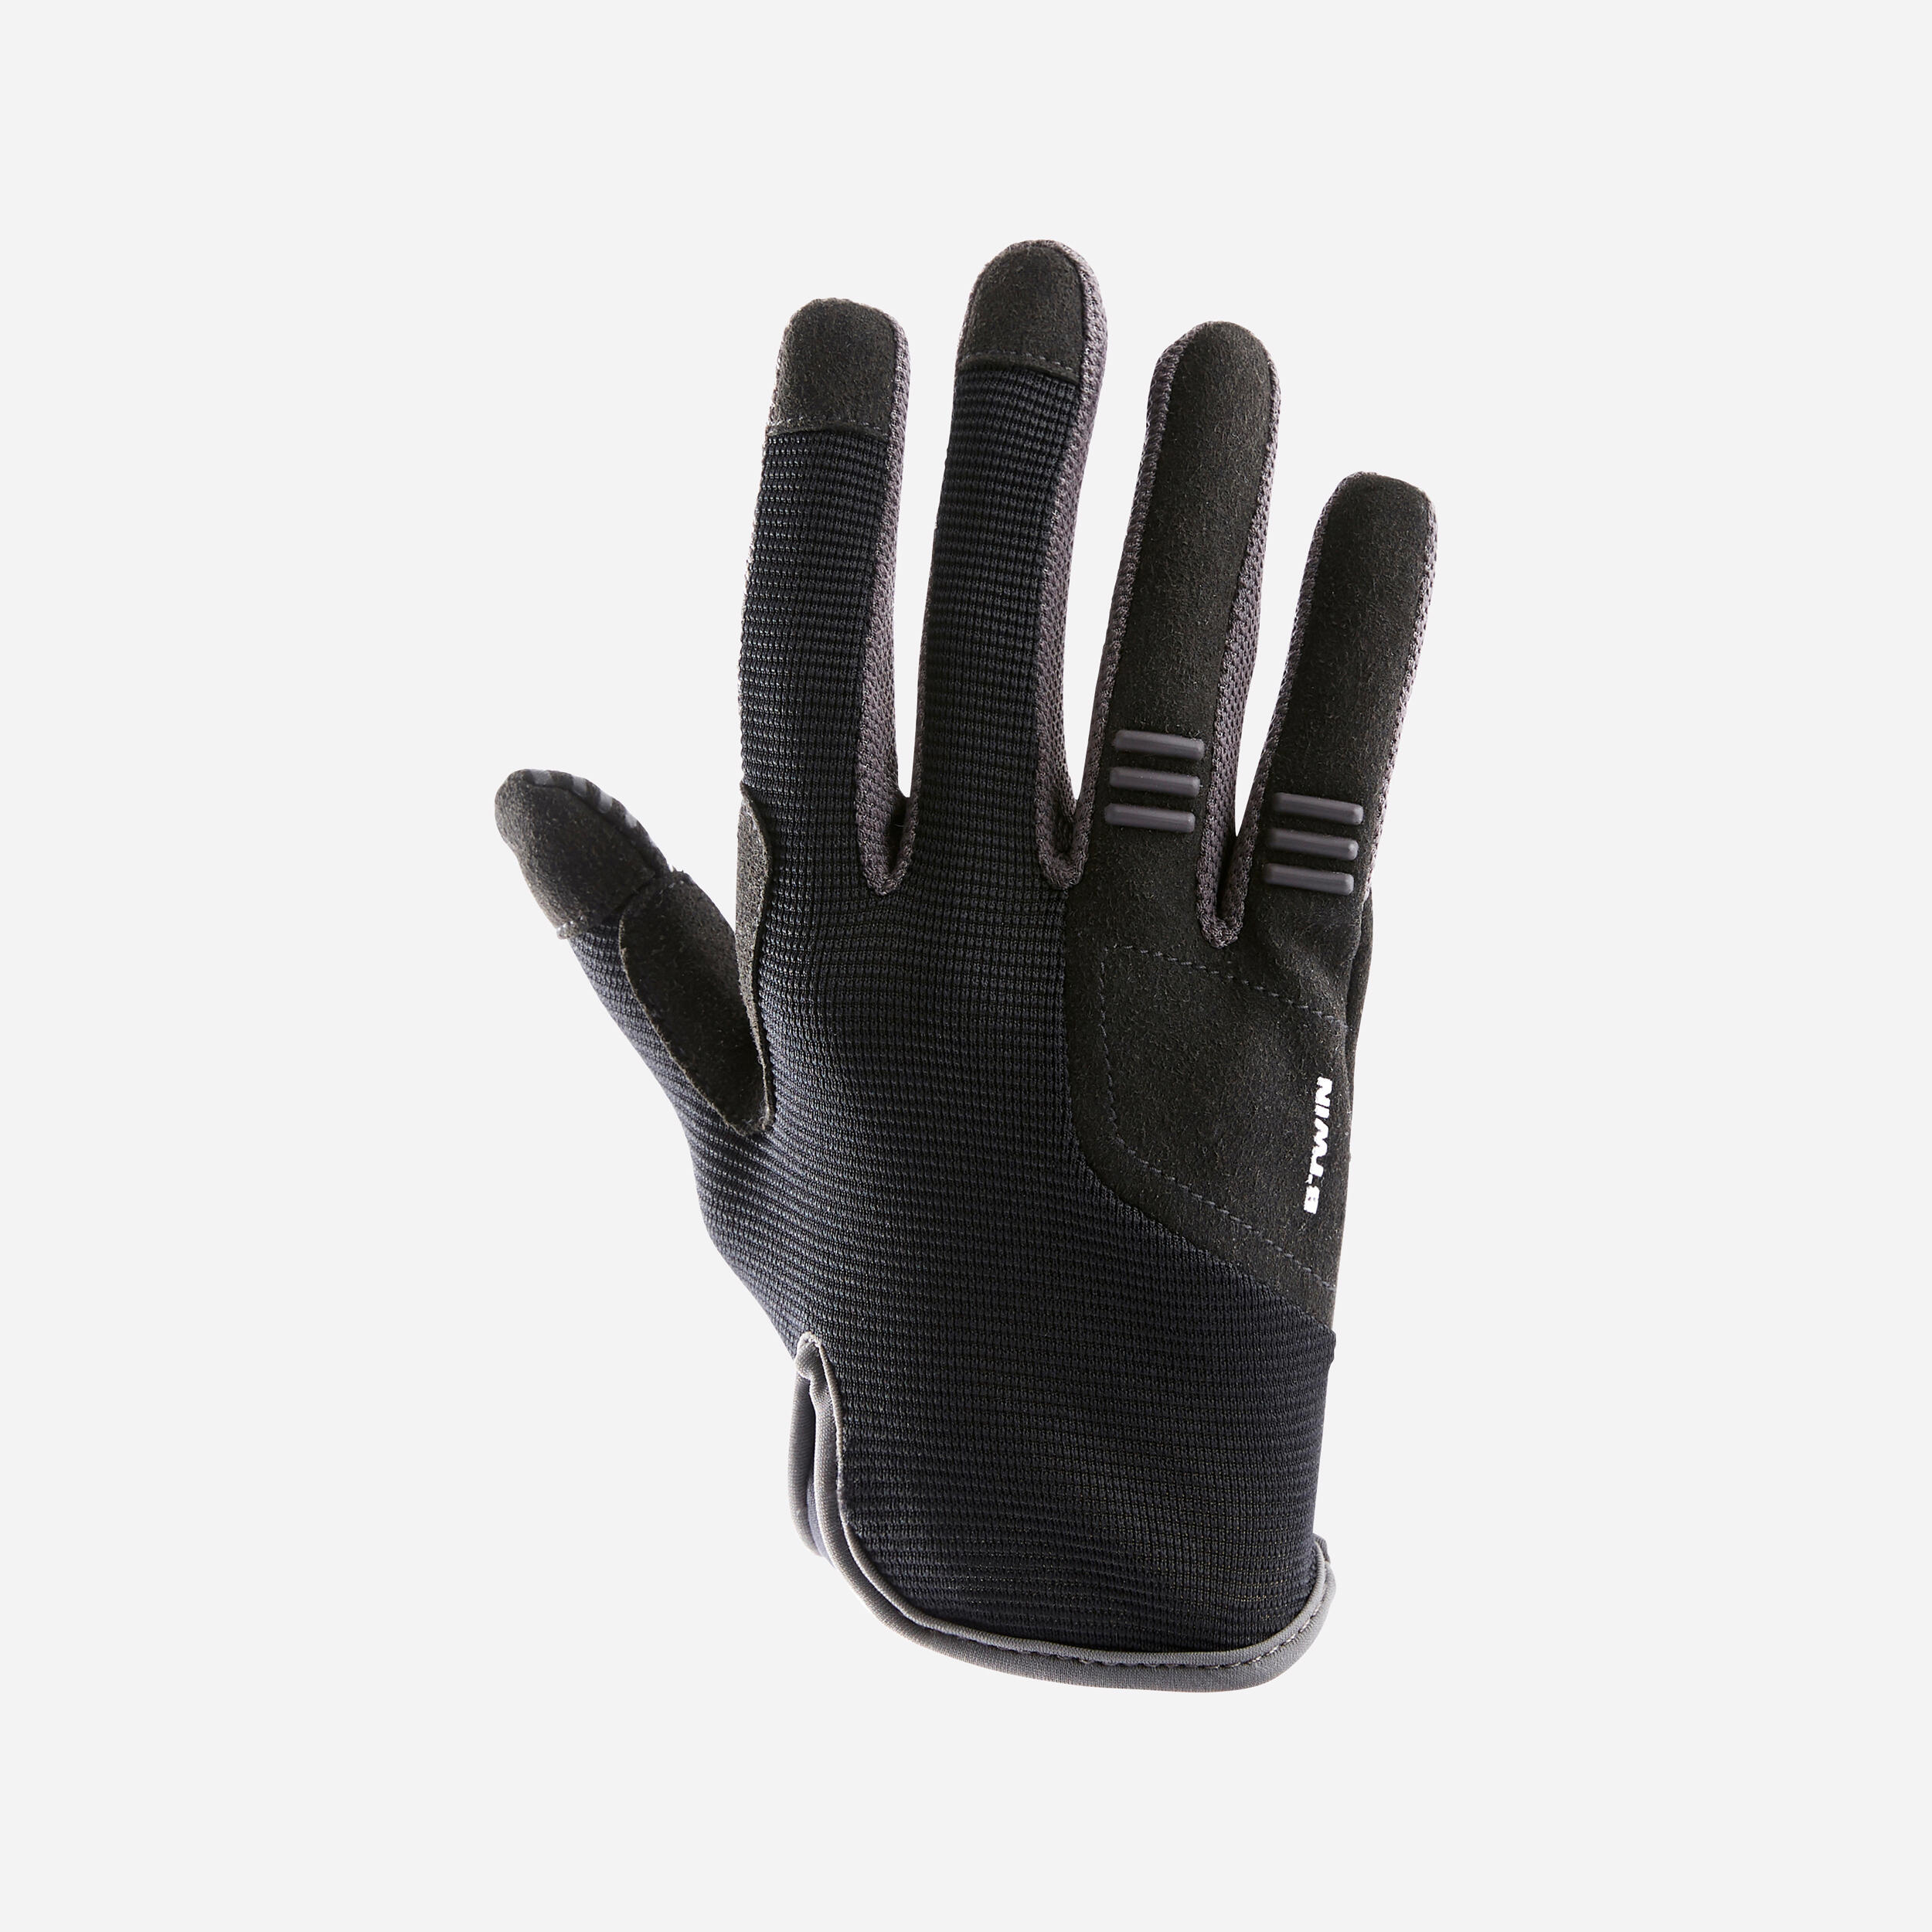 BTWIN Kids' Long Cycling Gloves - Black/Grey